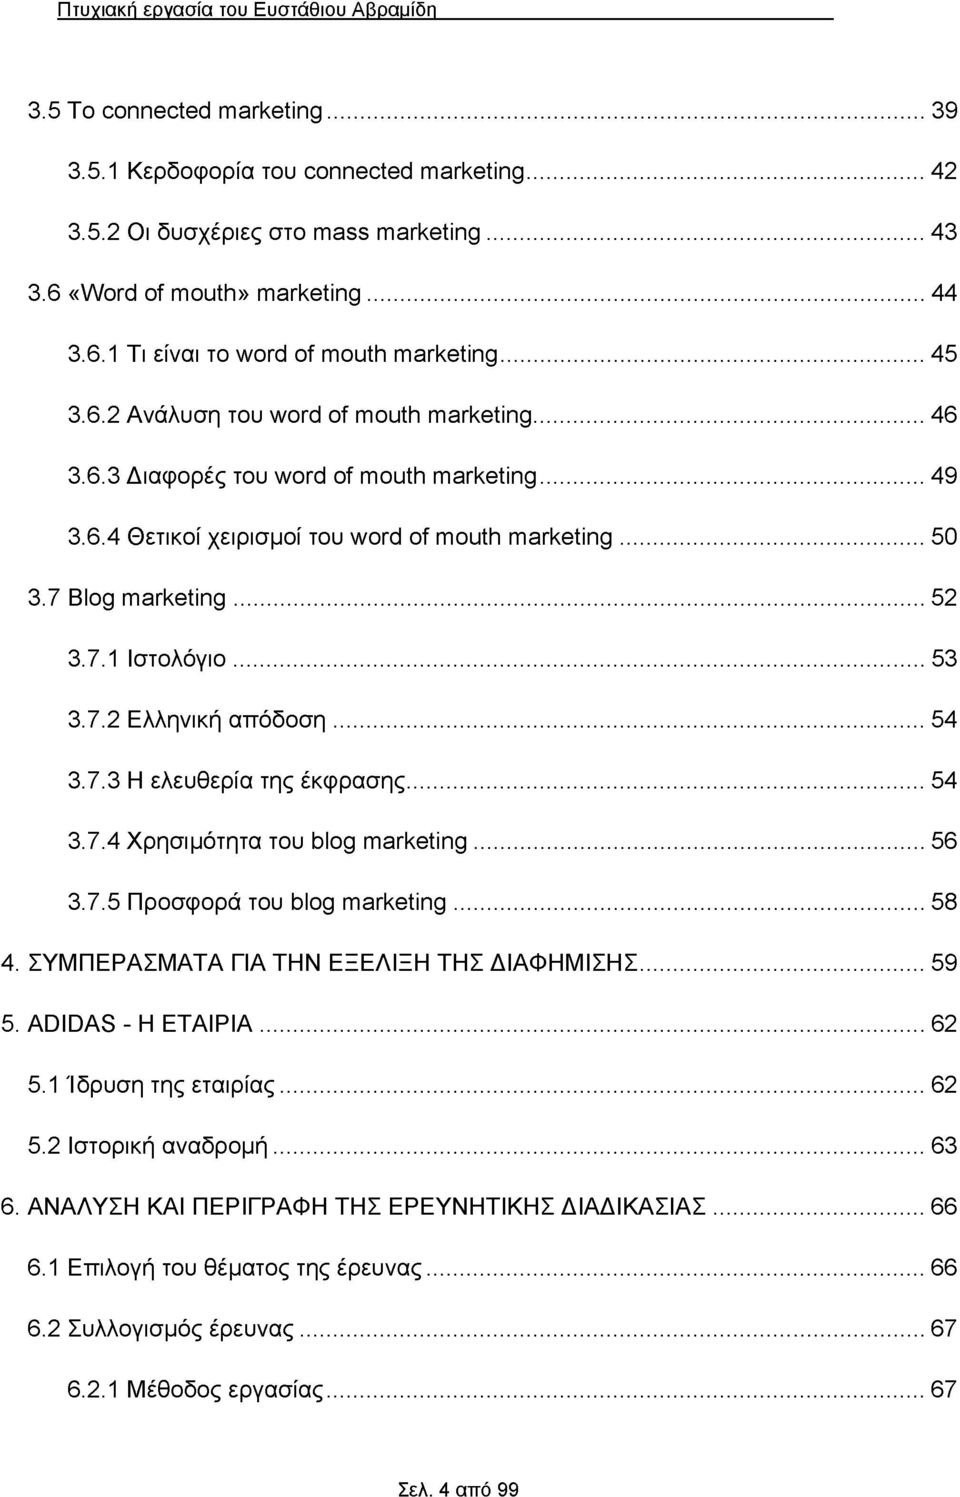 7 Blog marketing...52 3.7.1 Ιστολόγιο... 53 3.7.2 Ελληνική απόδοση...54 3.7.3 Η ελευθερία της έκφρασης...54 3.7.4 Χρησιμότητα του blog marketing... 56 3.7.5 Προσφορά του blog marketing... 58 4.